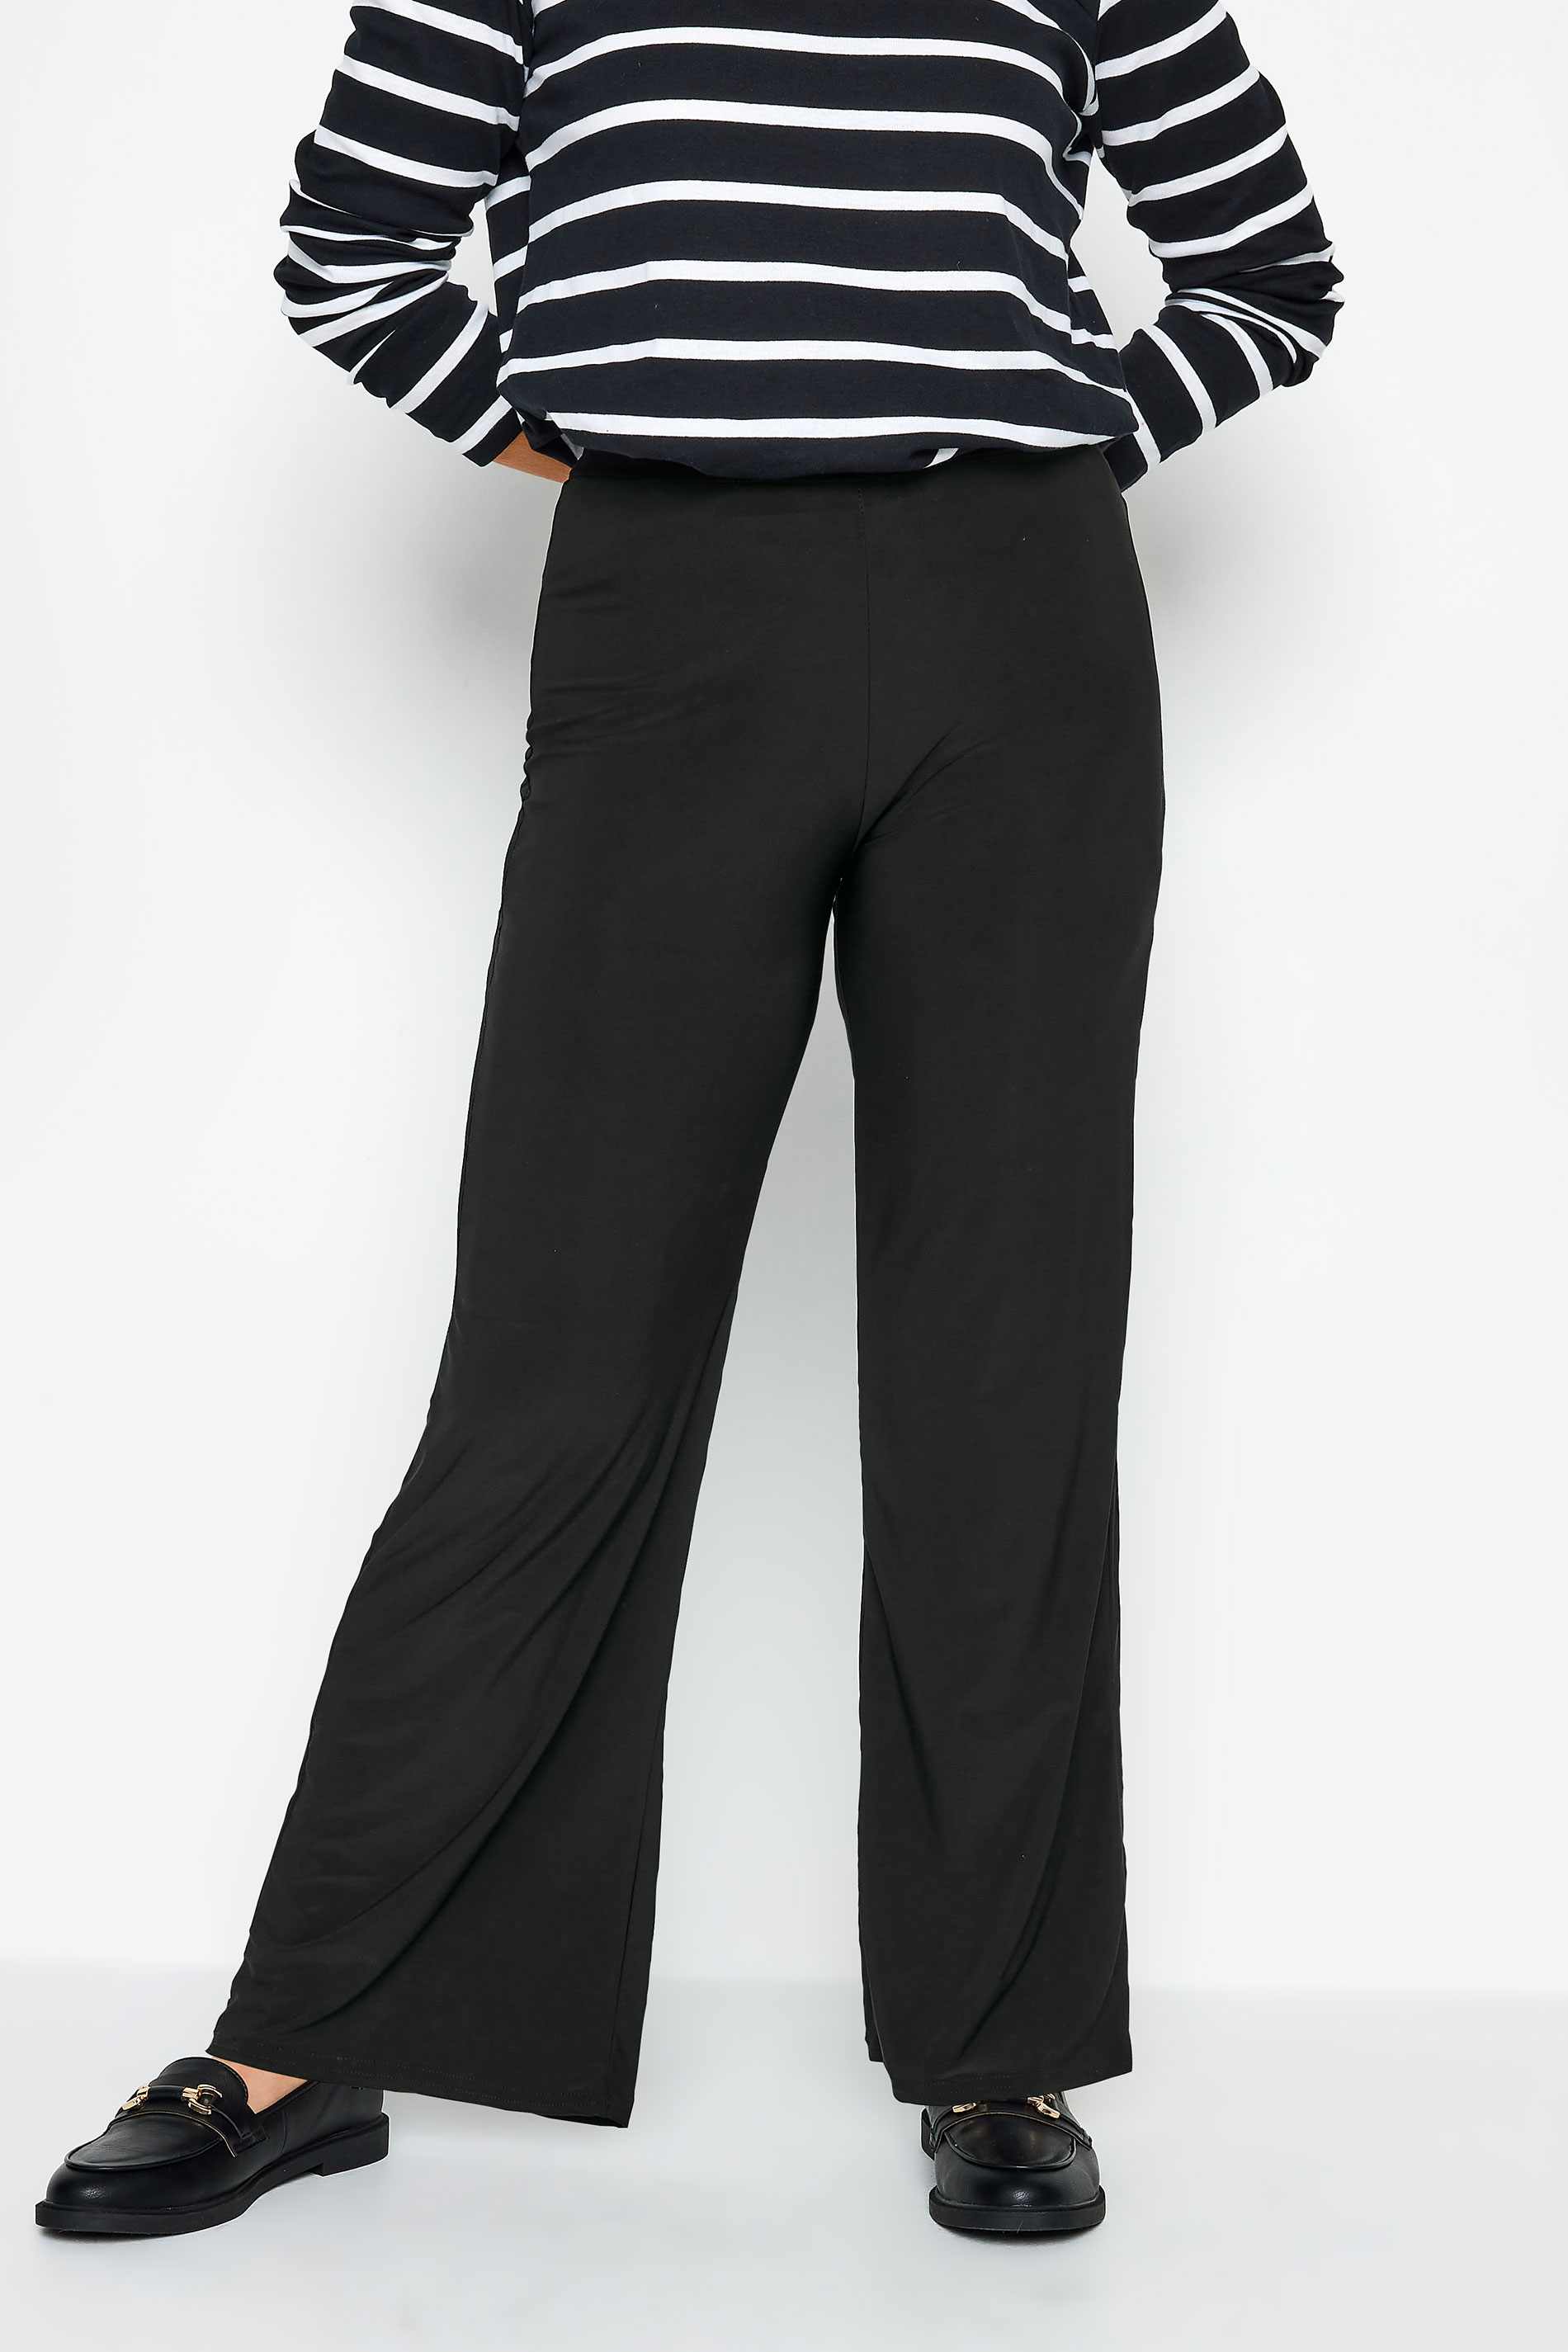 M&Co Black Stretch Wide Leg Trousers | M&Co 1